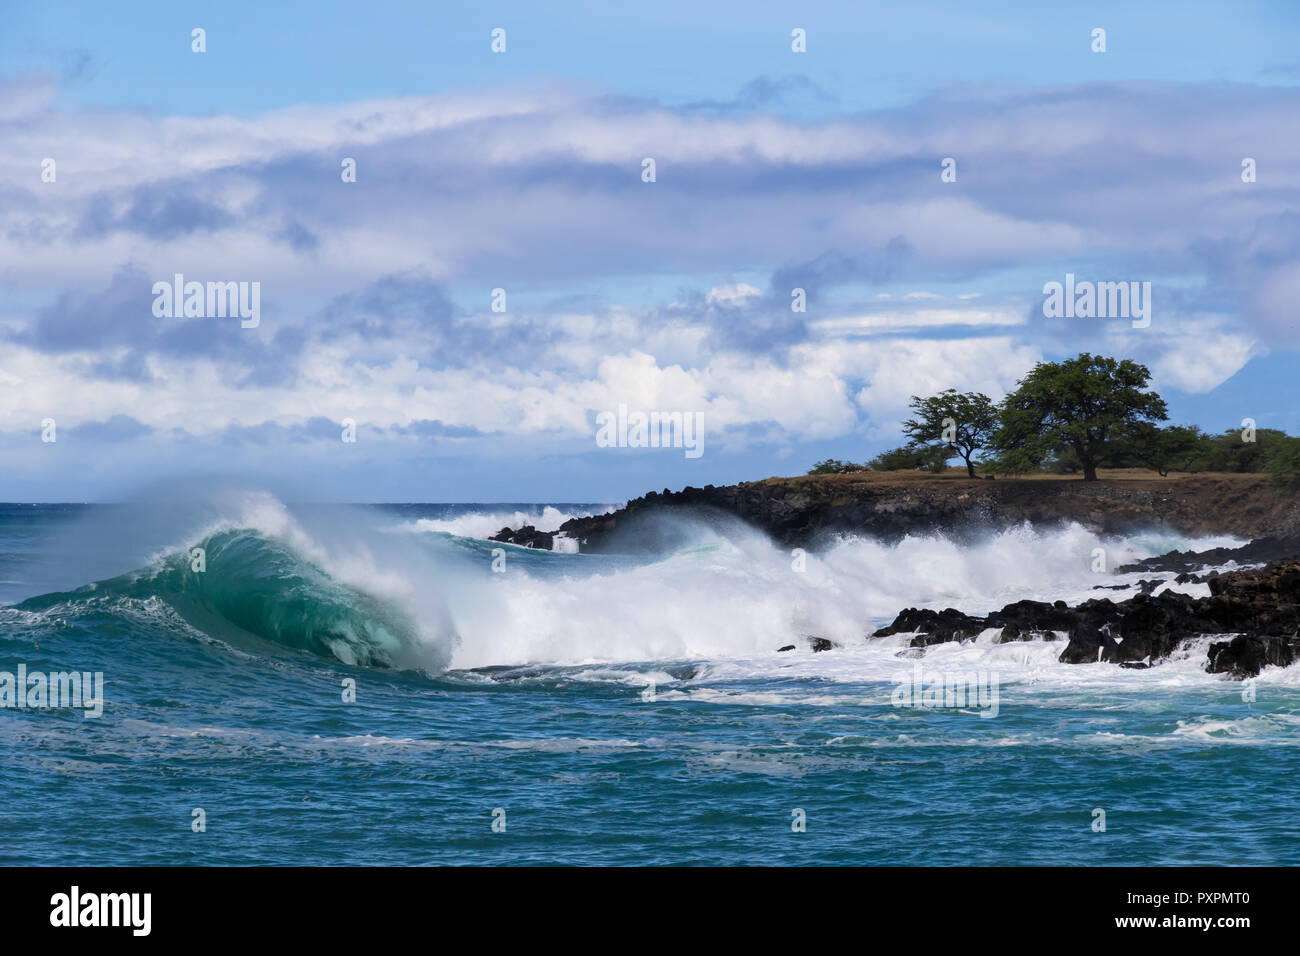 Curling wave cresting and trailing sea spray as it breaks near the shoreline of the Kona coast on Hawaii's Big Island. Stock Photo